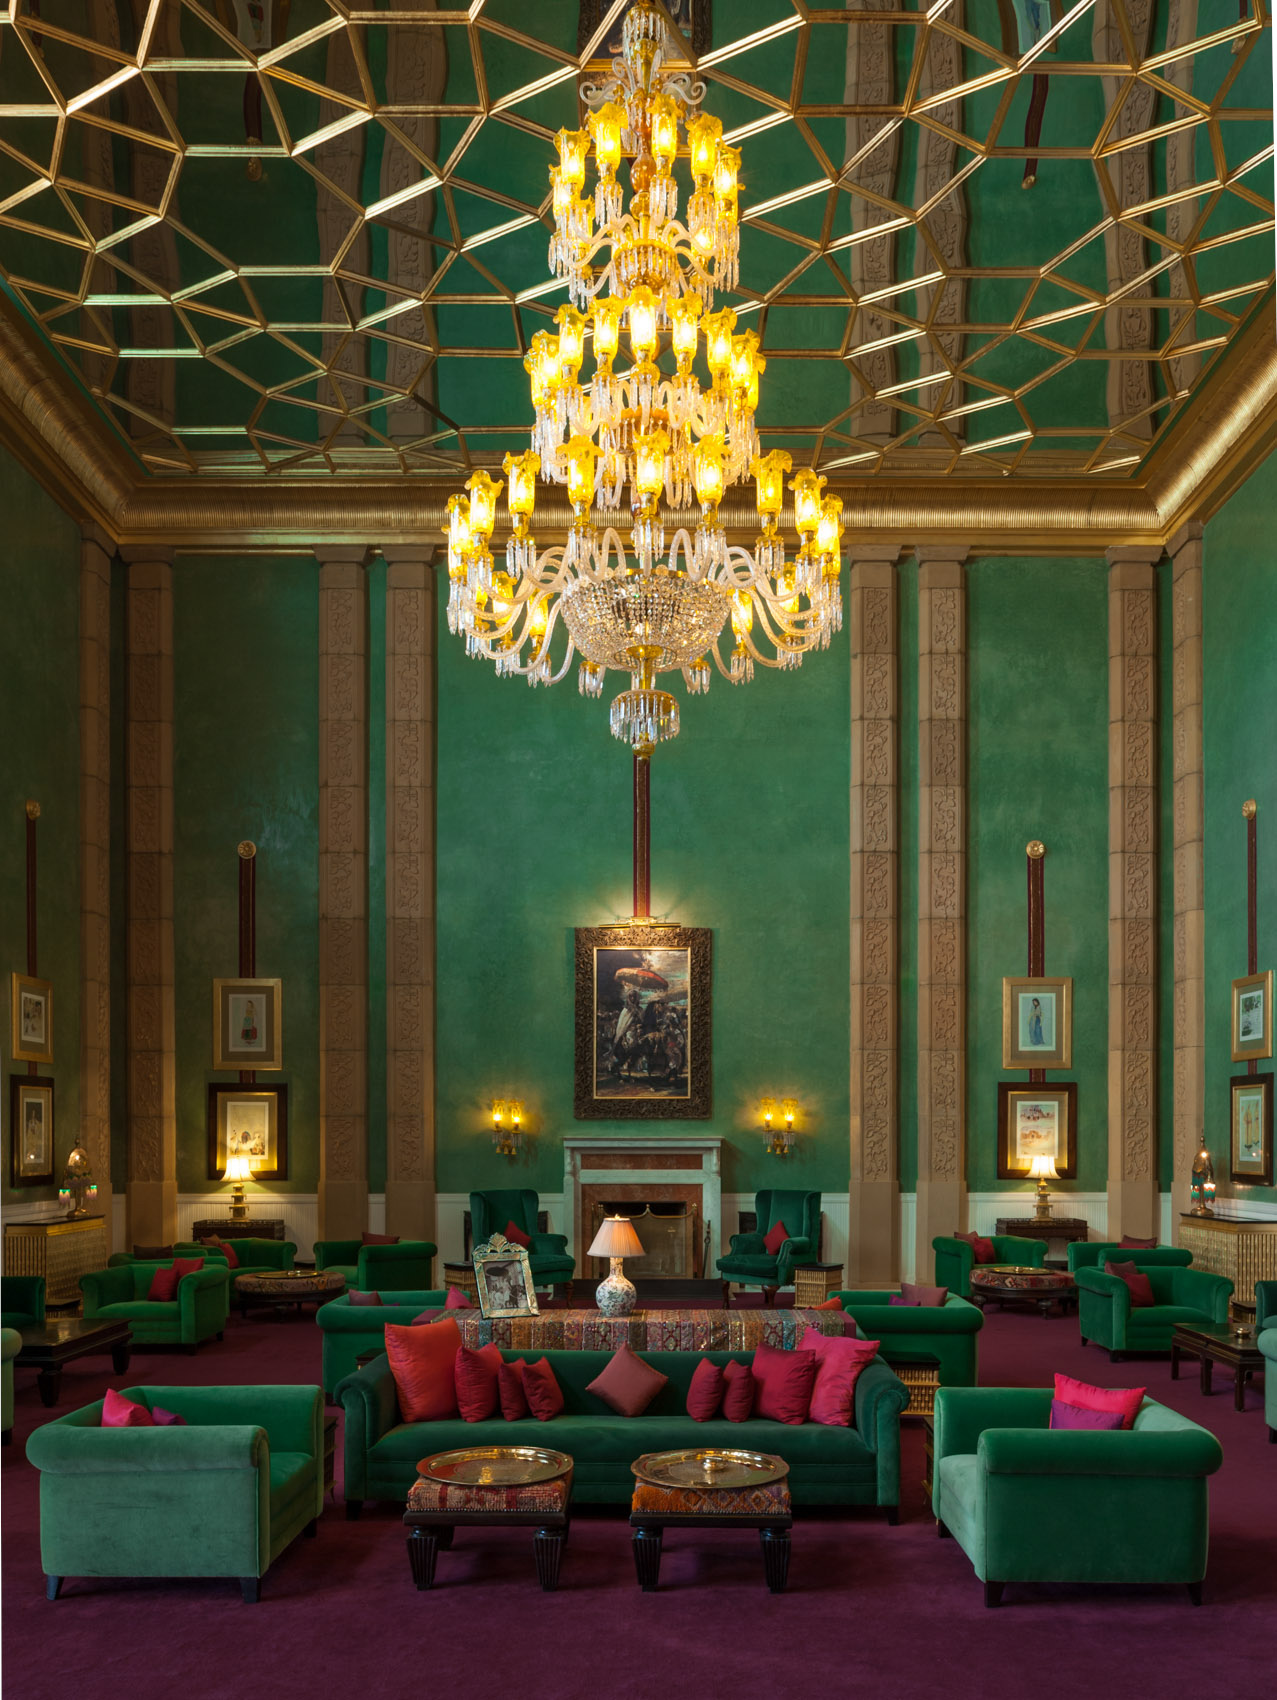 130123-176 Hotel foyer, Marrakech